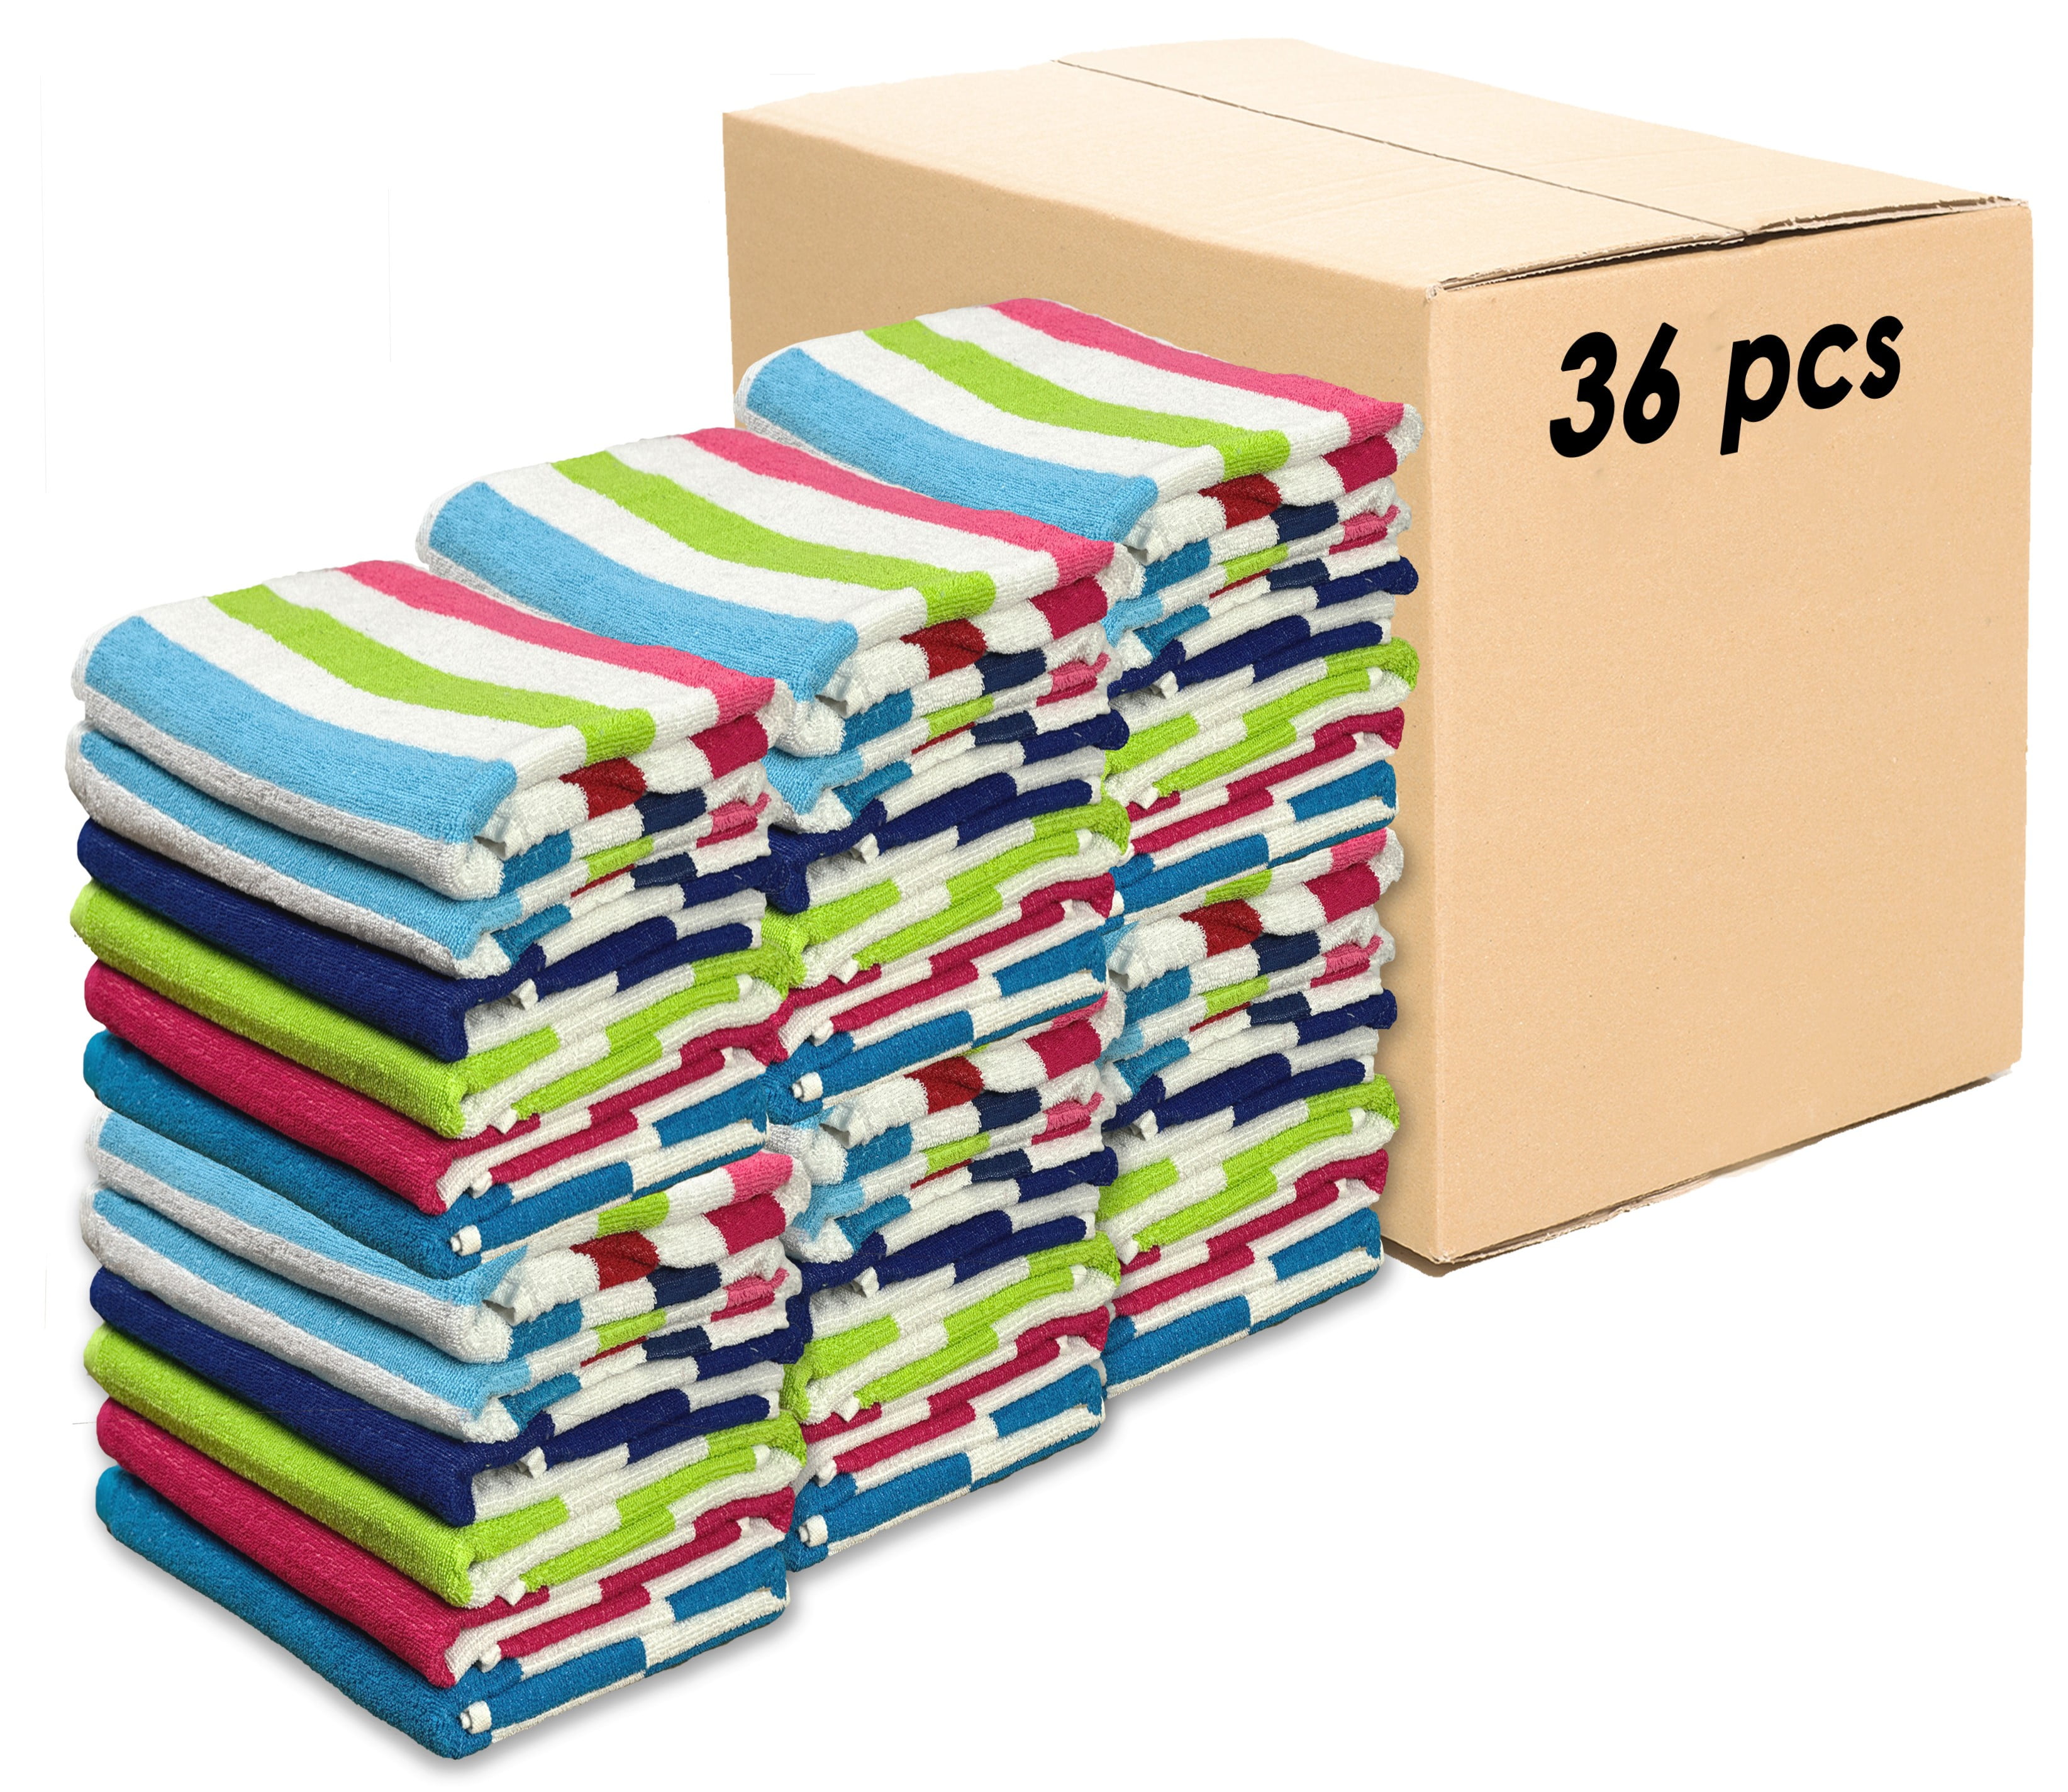 Ben Kaufman 100% Cotton Velour Towels - Large Cotton Towels - Soft &  Absorbant - Assorted Striped Colors - 30” x 60” - 4 Pack